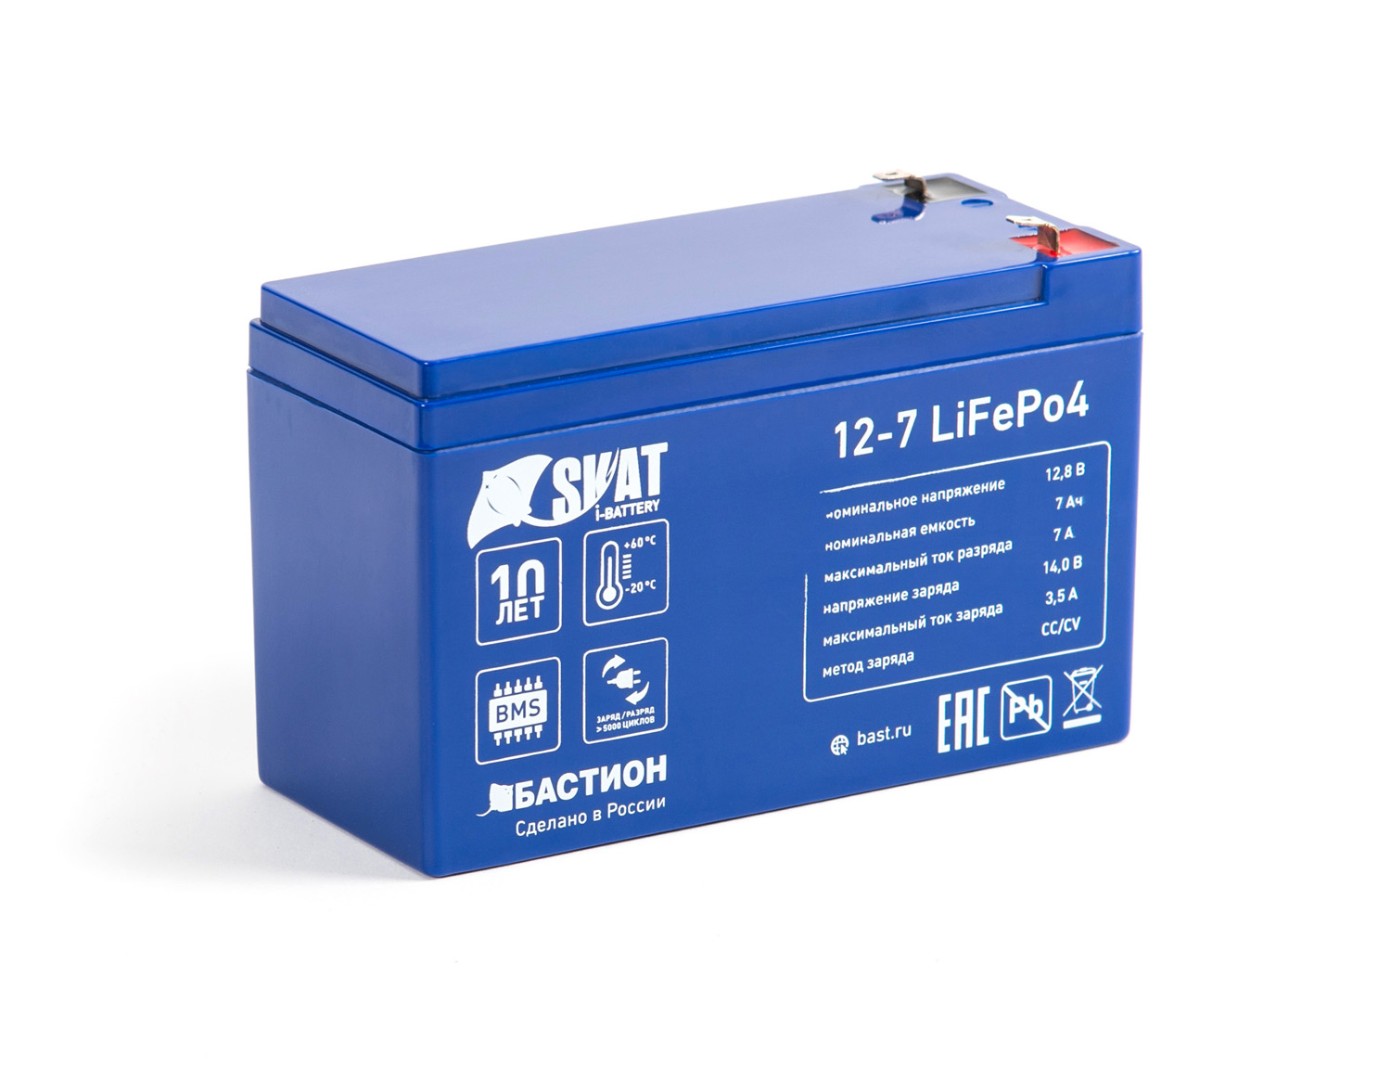 Battery 12 12. АКБ lifepo4. Skat-i-Battery 12-7 lifepo4. Аккумулятор литий-ионный 12v. Lifepo4 аккумулятор 12в.